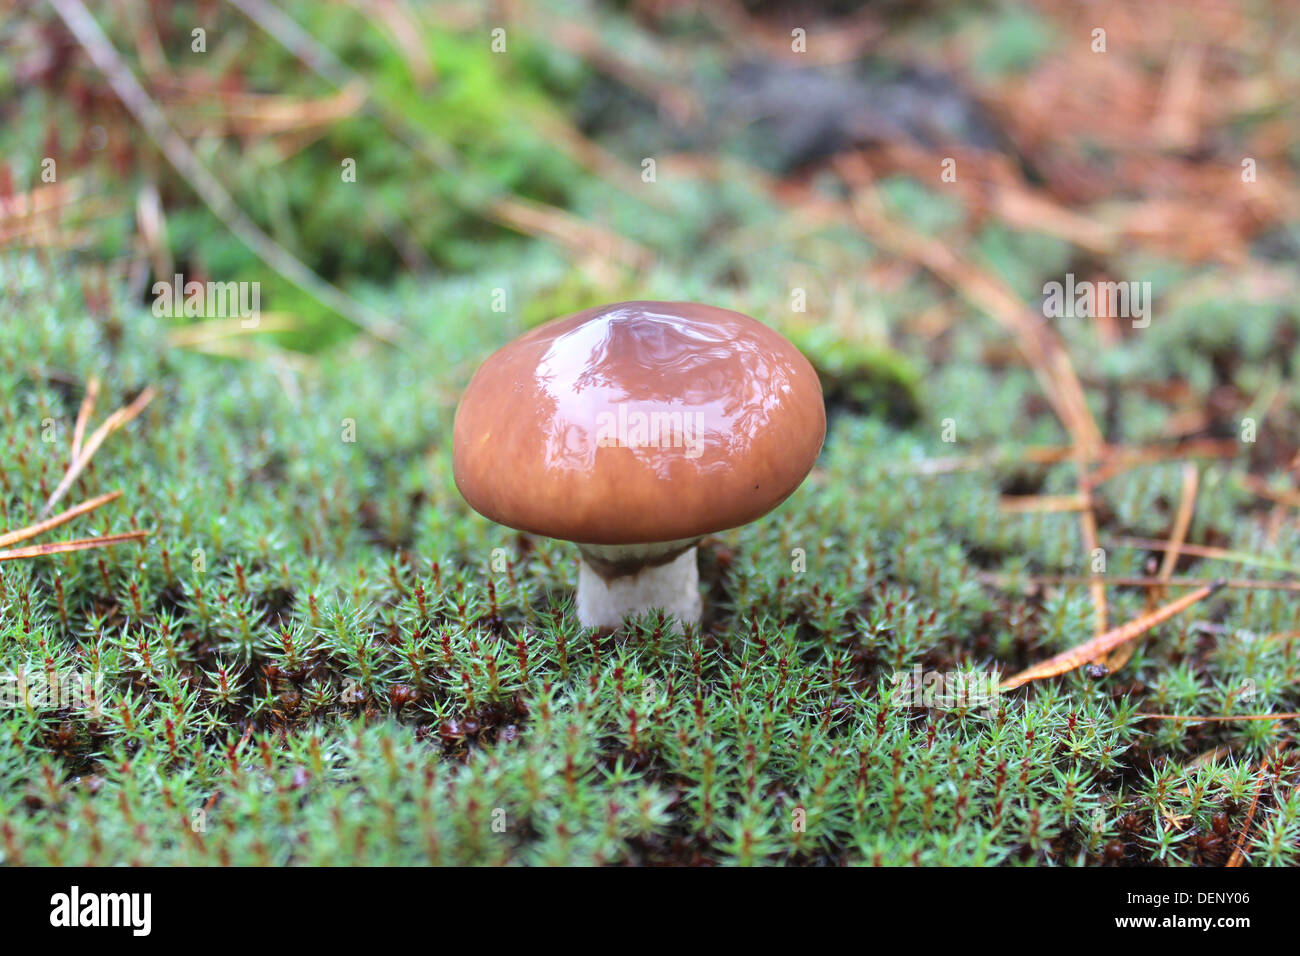 Qualche bel fungo nel verde muschio Foto Stock